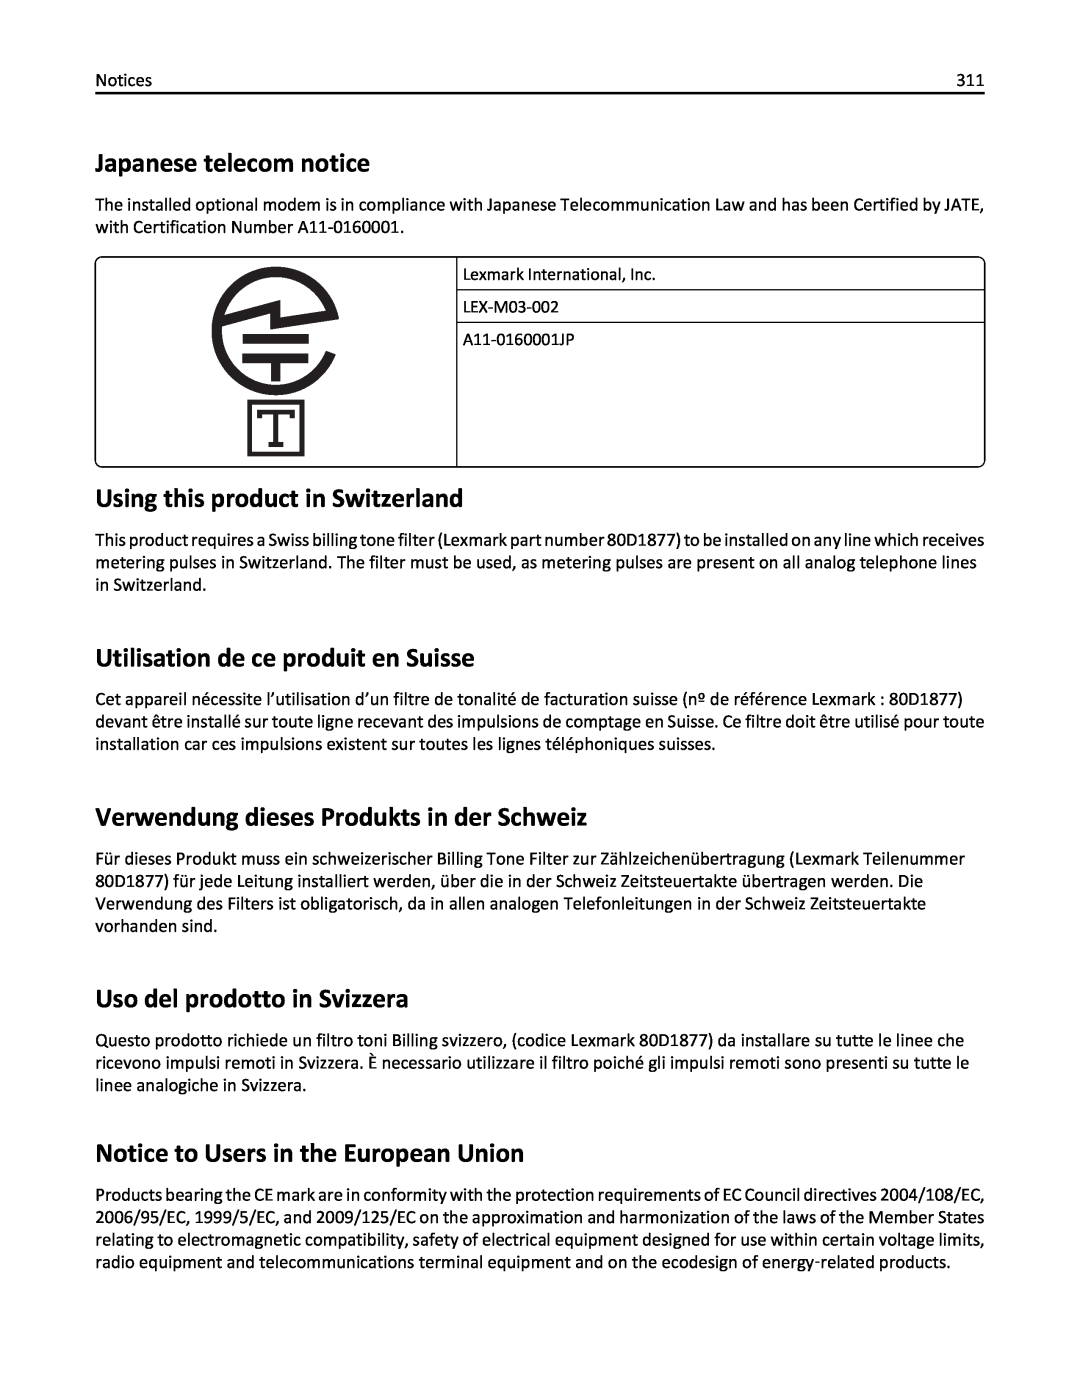 Lexmark 675, 470, 35S5701 Japanese telecom notice, Using this product in Switzerland, Utilisation de ce produit en Suisse 